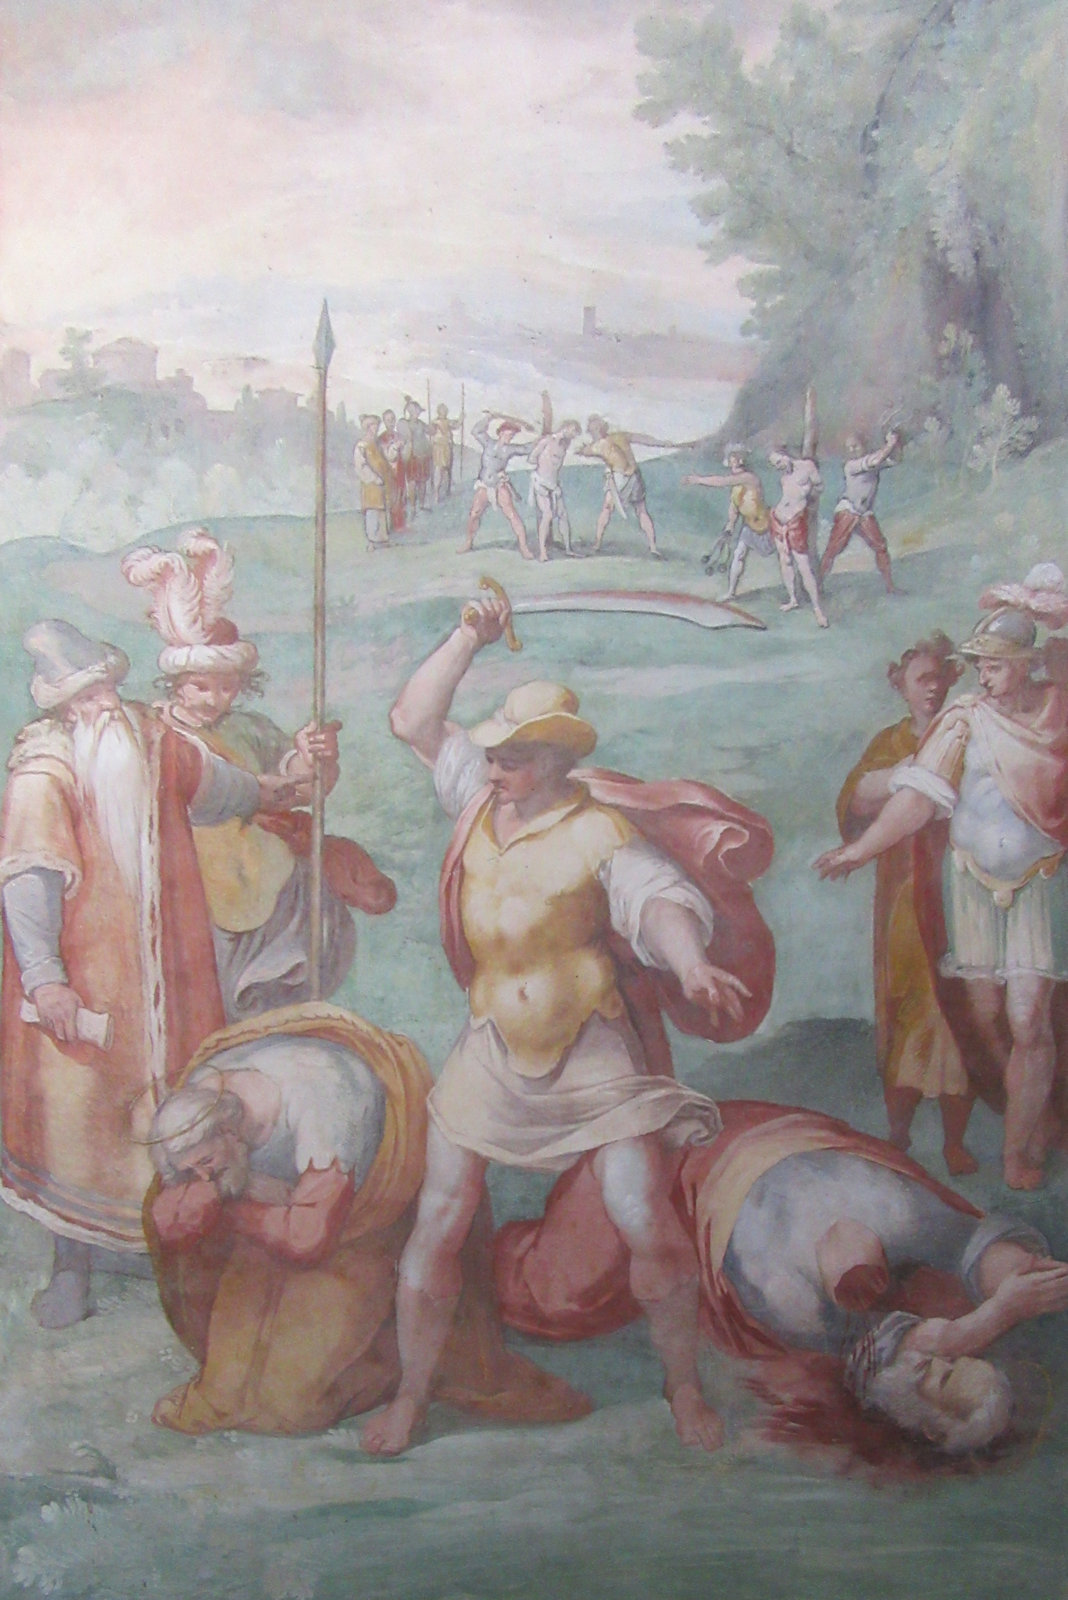 Primus' und Felicianus' Enthauptung, Fresko in der Primus und Felicianus geweihten Kapelle der Kirche San Stefano Rotondo in Rom